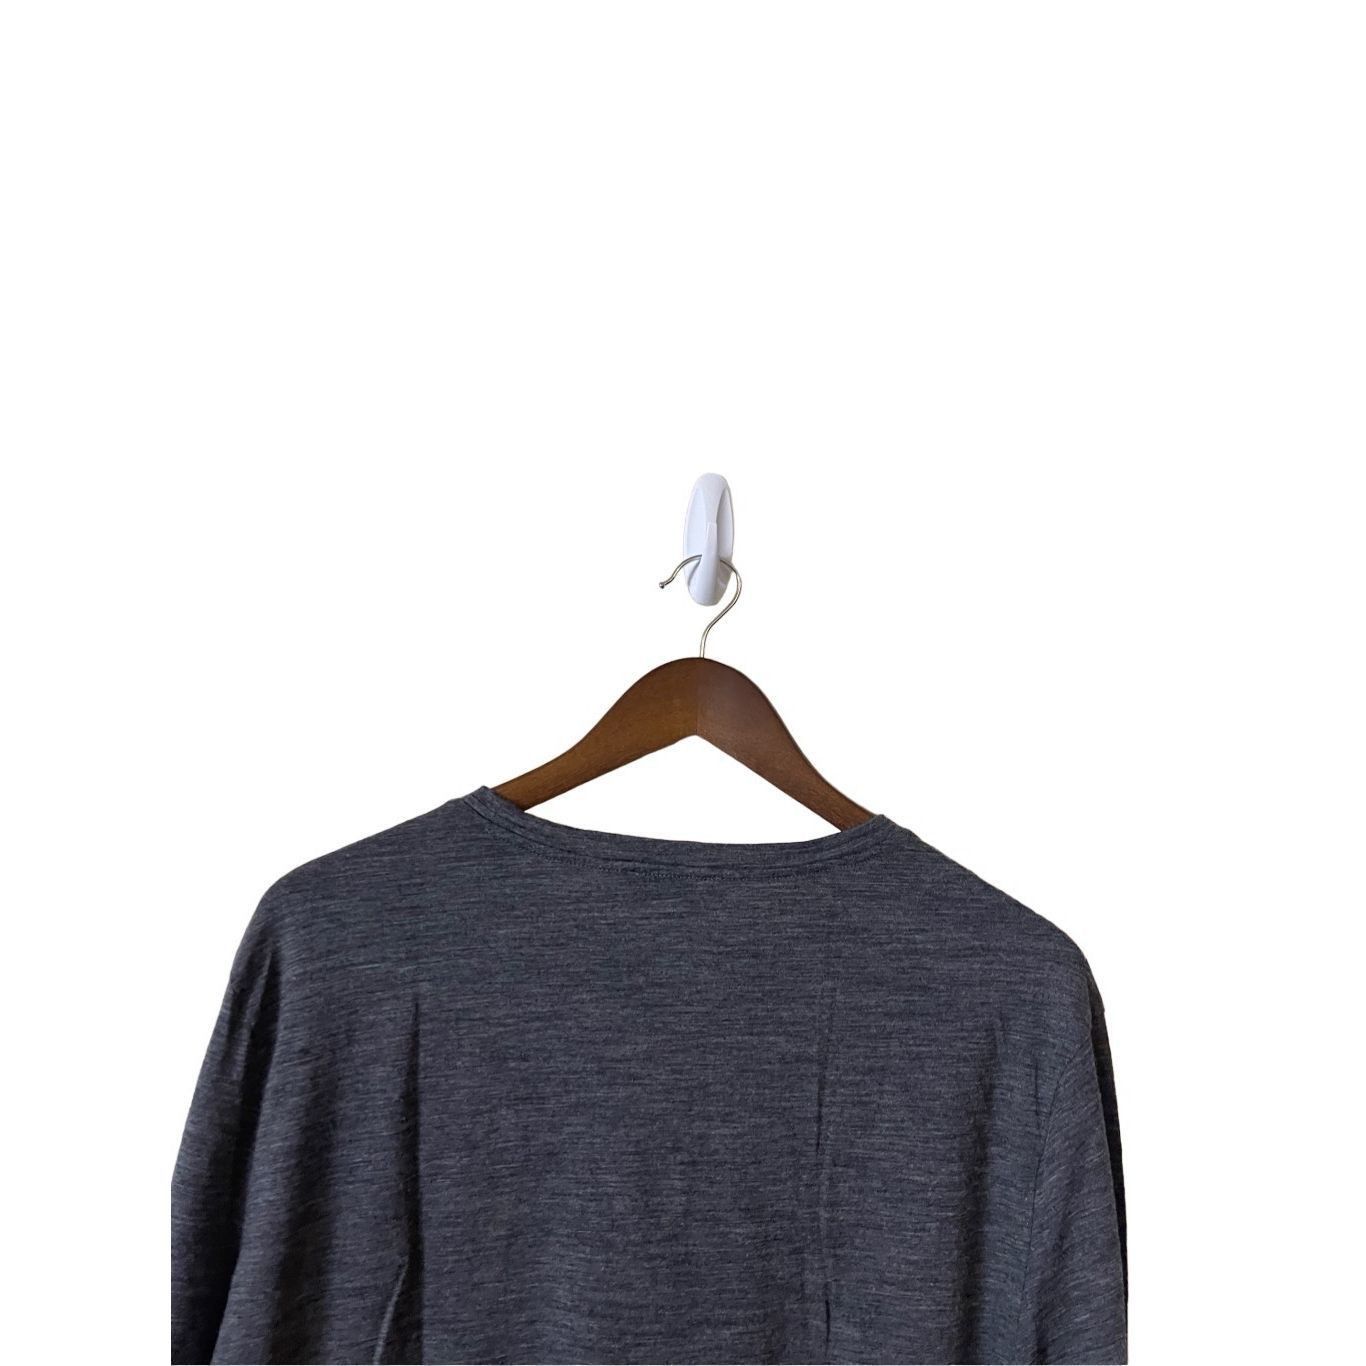 Cos COS 100% Wool Grey Crewneck Long Sleeve Lightweight Sweater Size US L / EU 52-54 / 3 - 3 Thumbnail